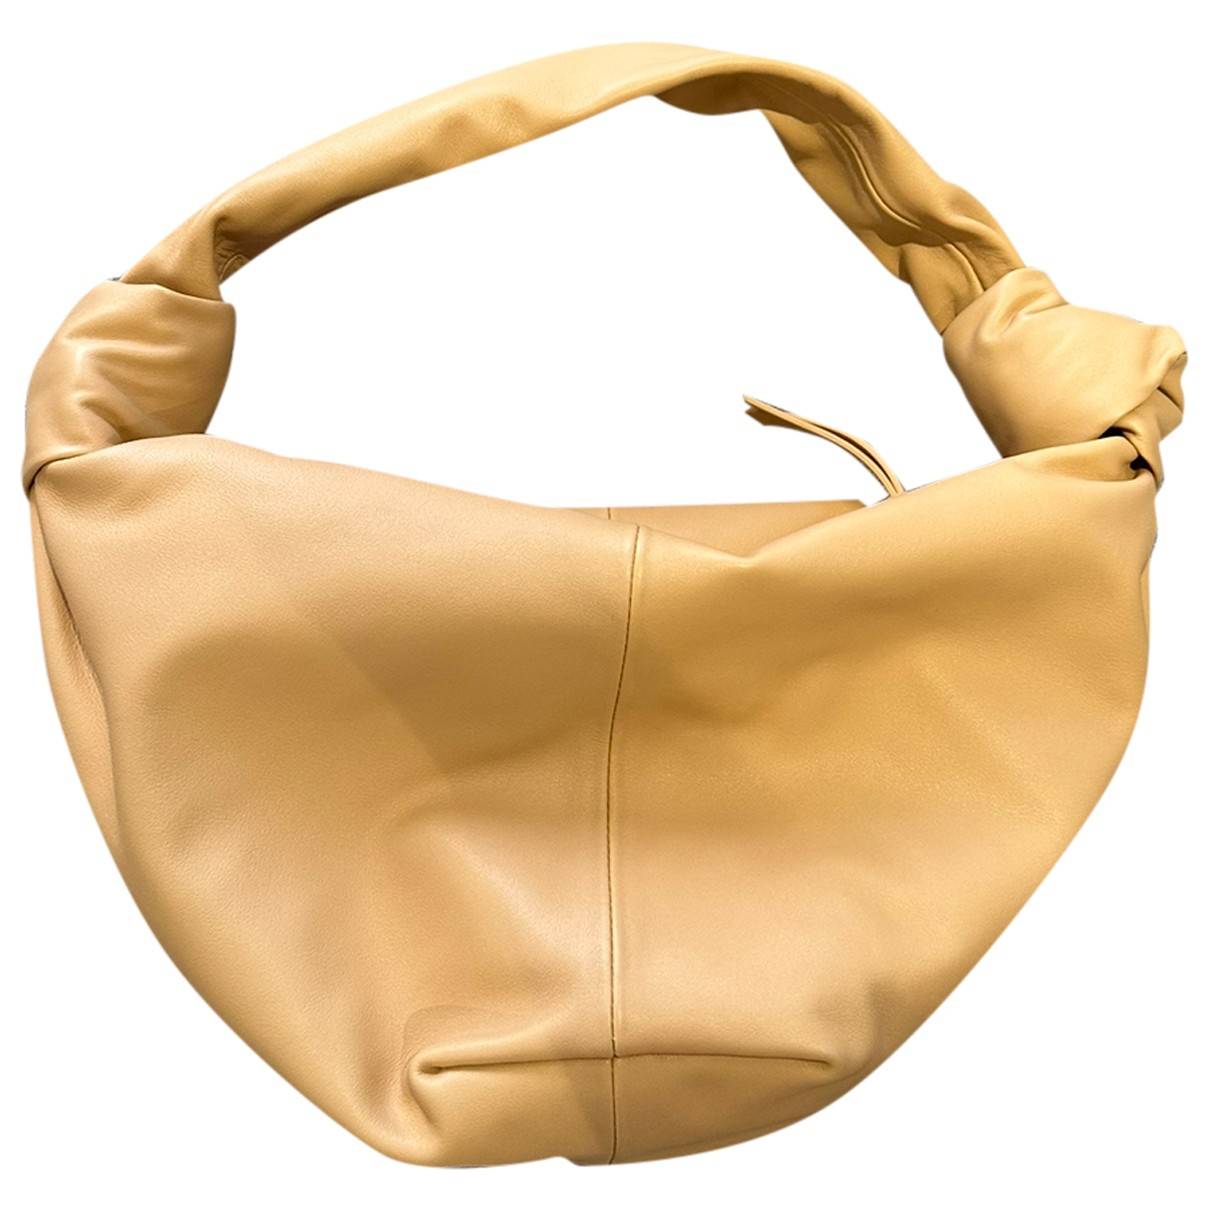 Double knot leather handbag Bottega Veneta White in Leather - 24837302